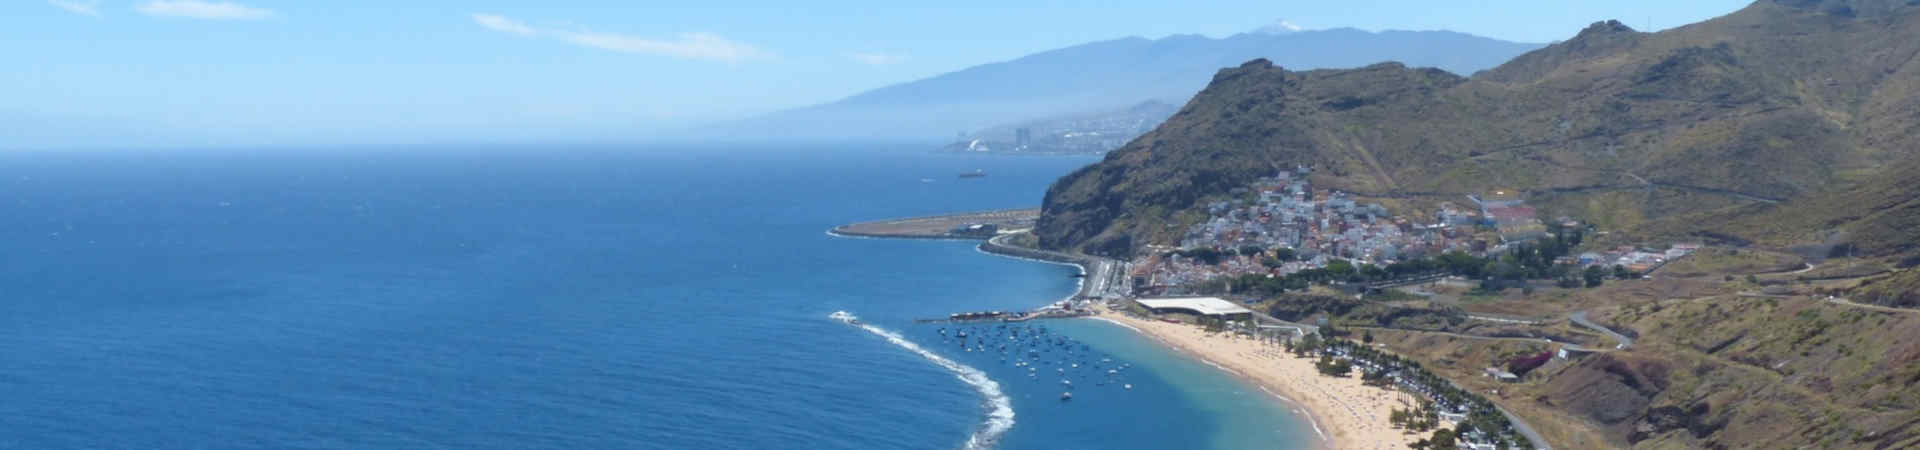 Image ressource du port de destination Tenerife (Santa Cruz) pour l'itinéraire du ferry Cadix - Tenerife (Santa Cruz)